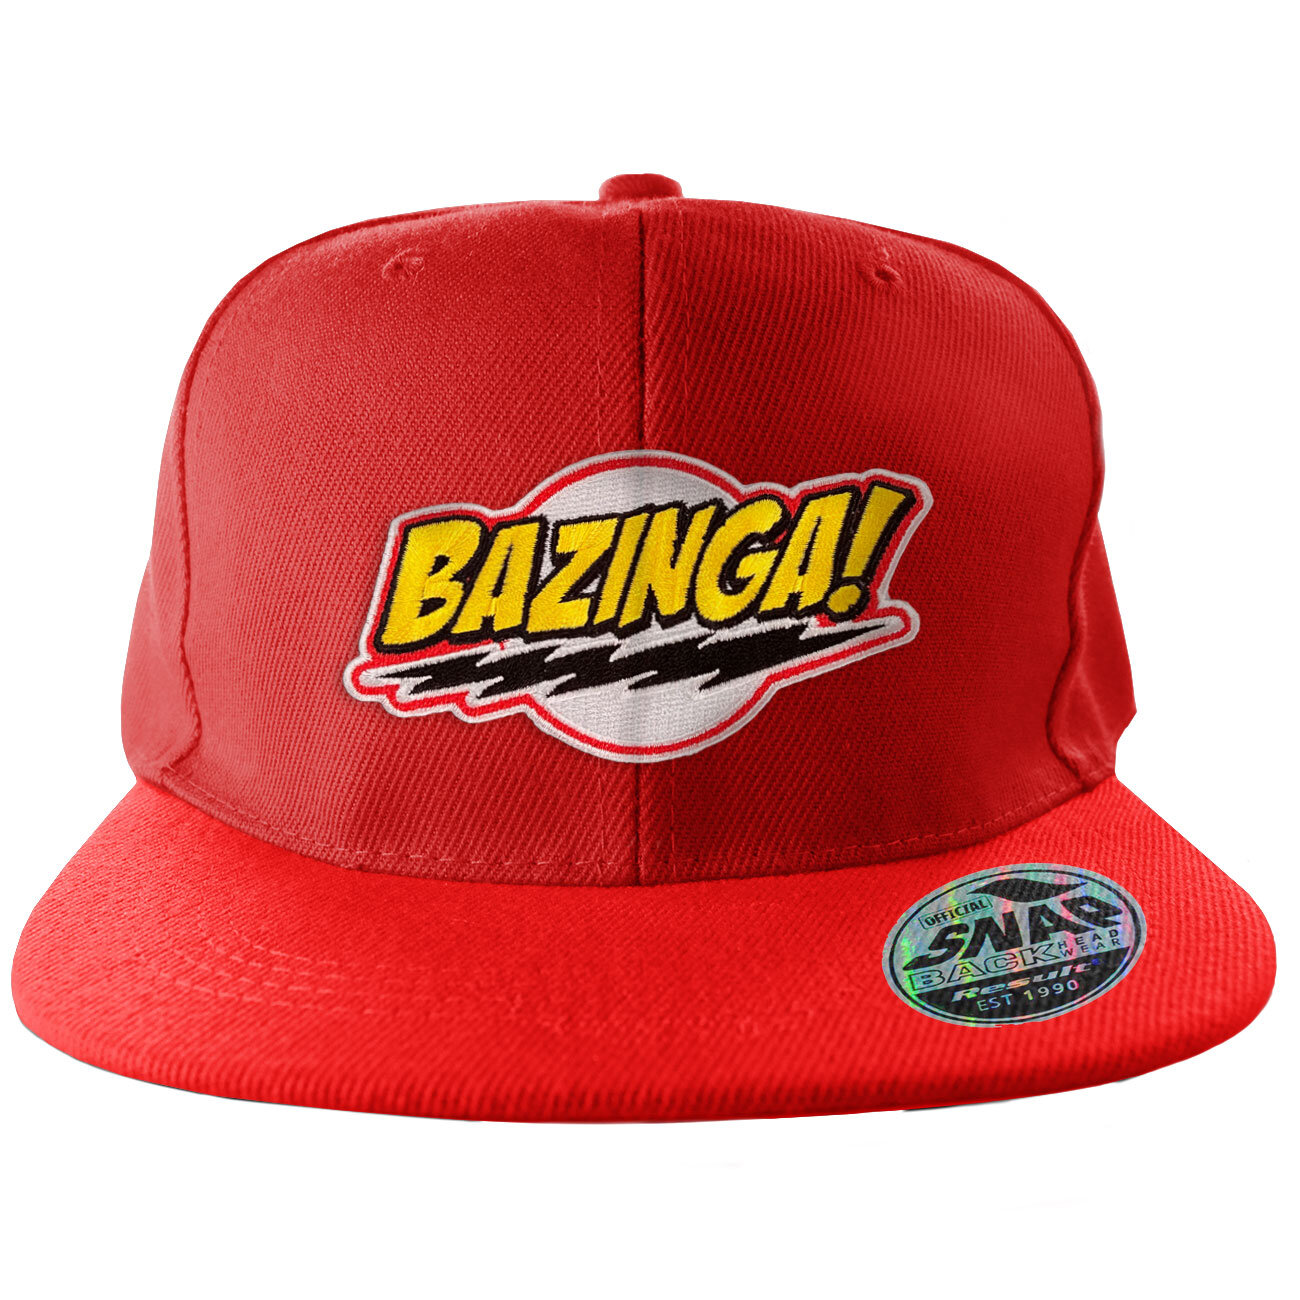 Bazinga Patch Standard Snapback Cap